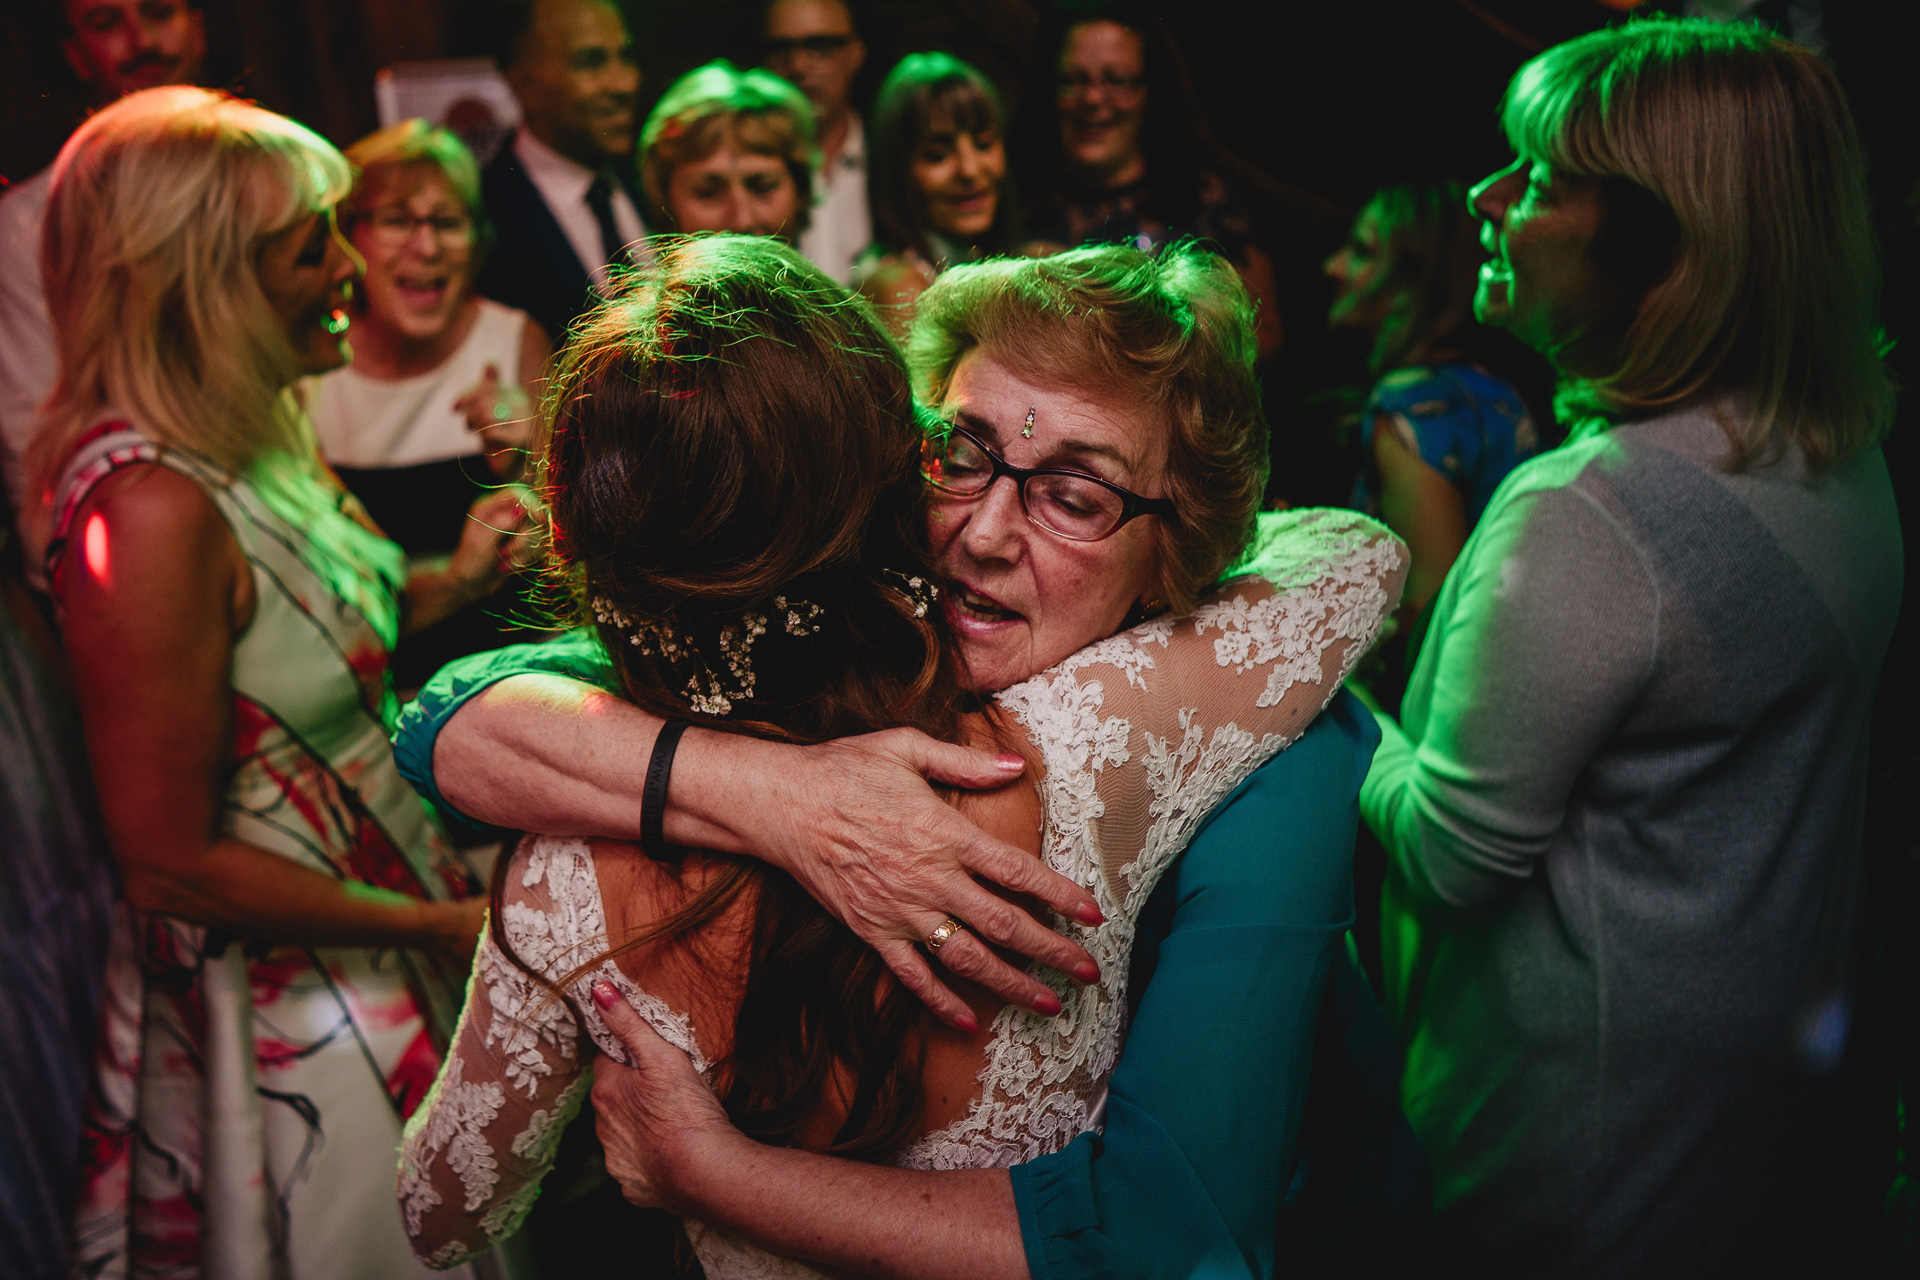 Grandmother hugging a bride on the dance floor